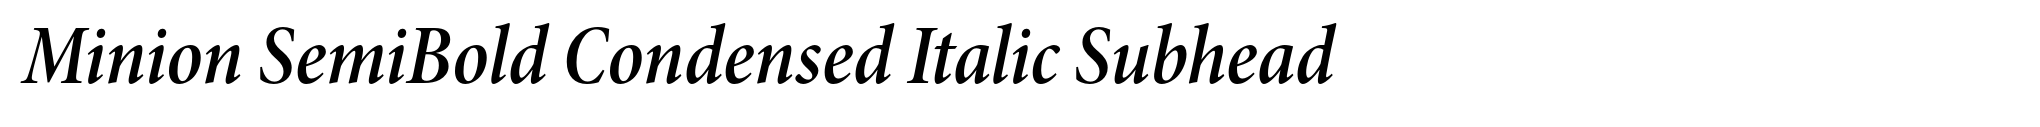 Minion SemiBold Condensed Italic Subhead image